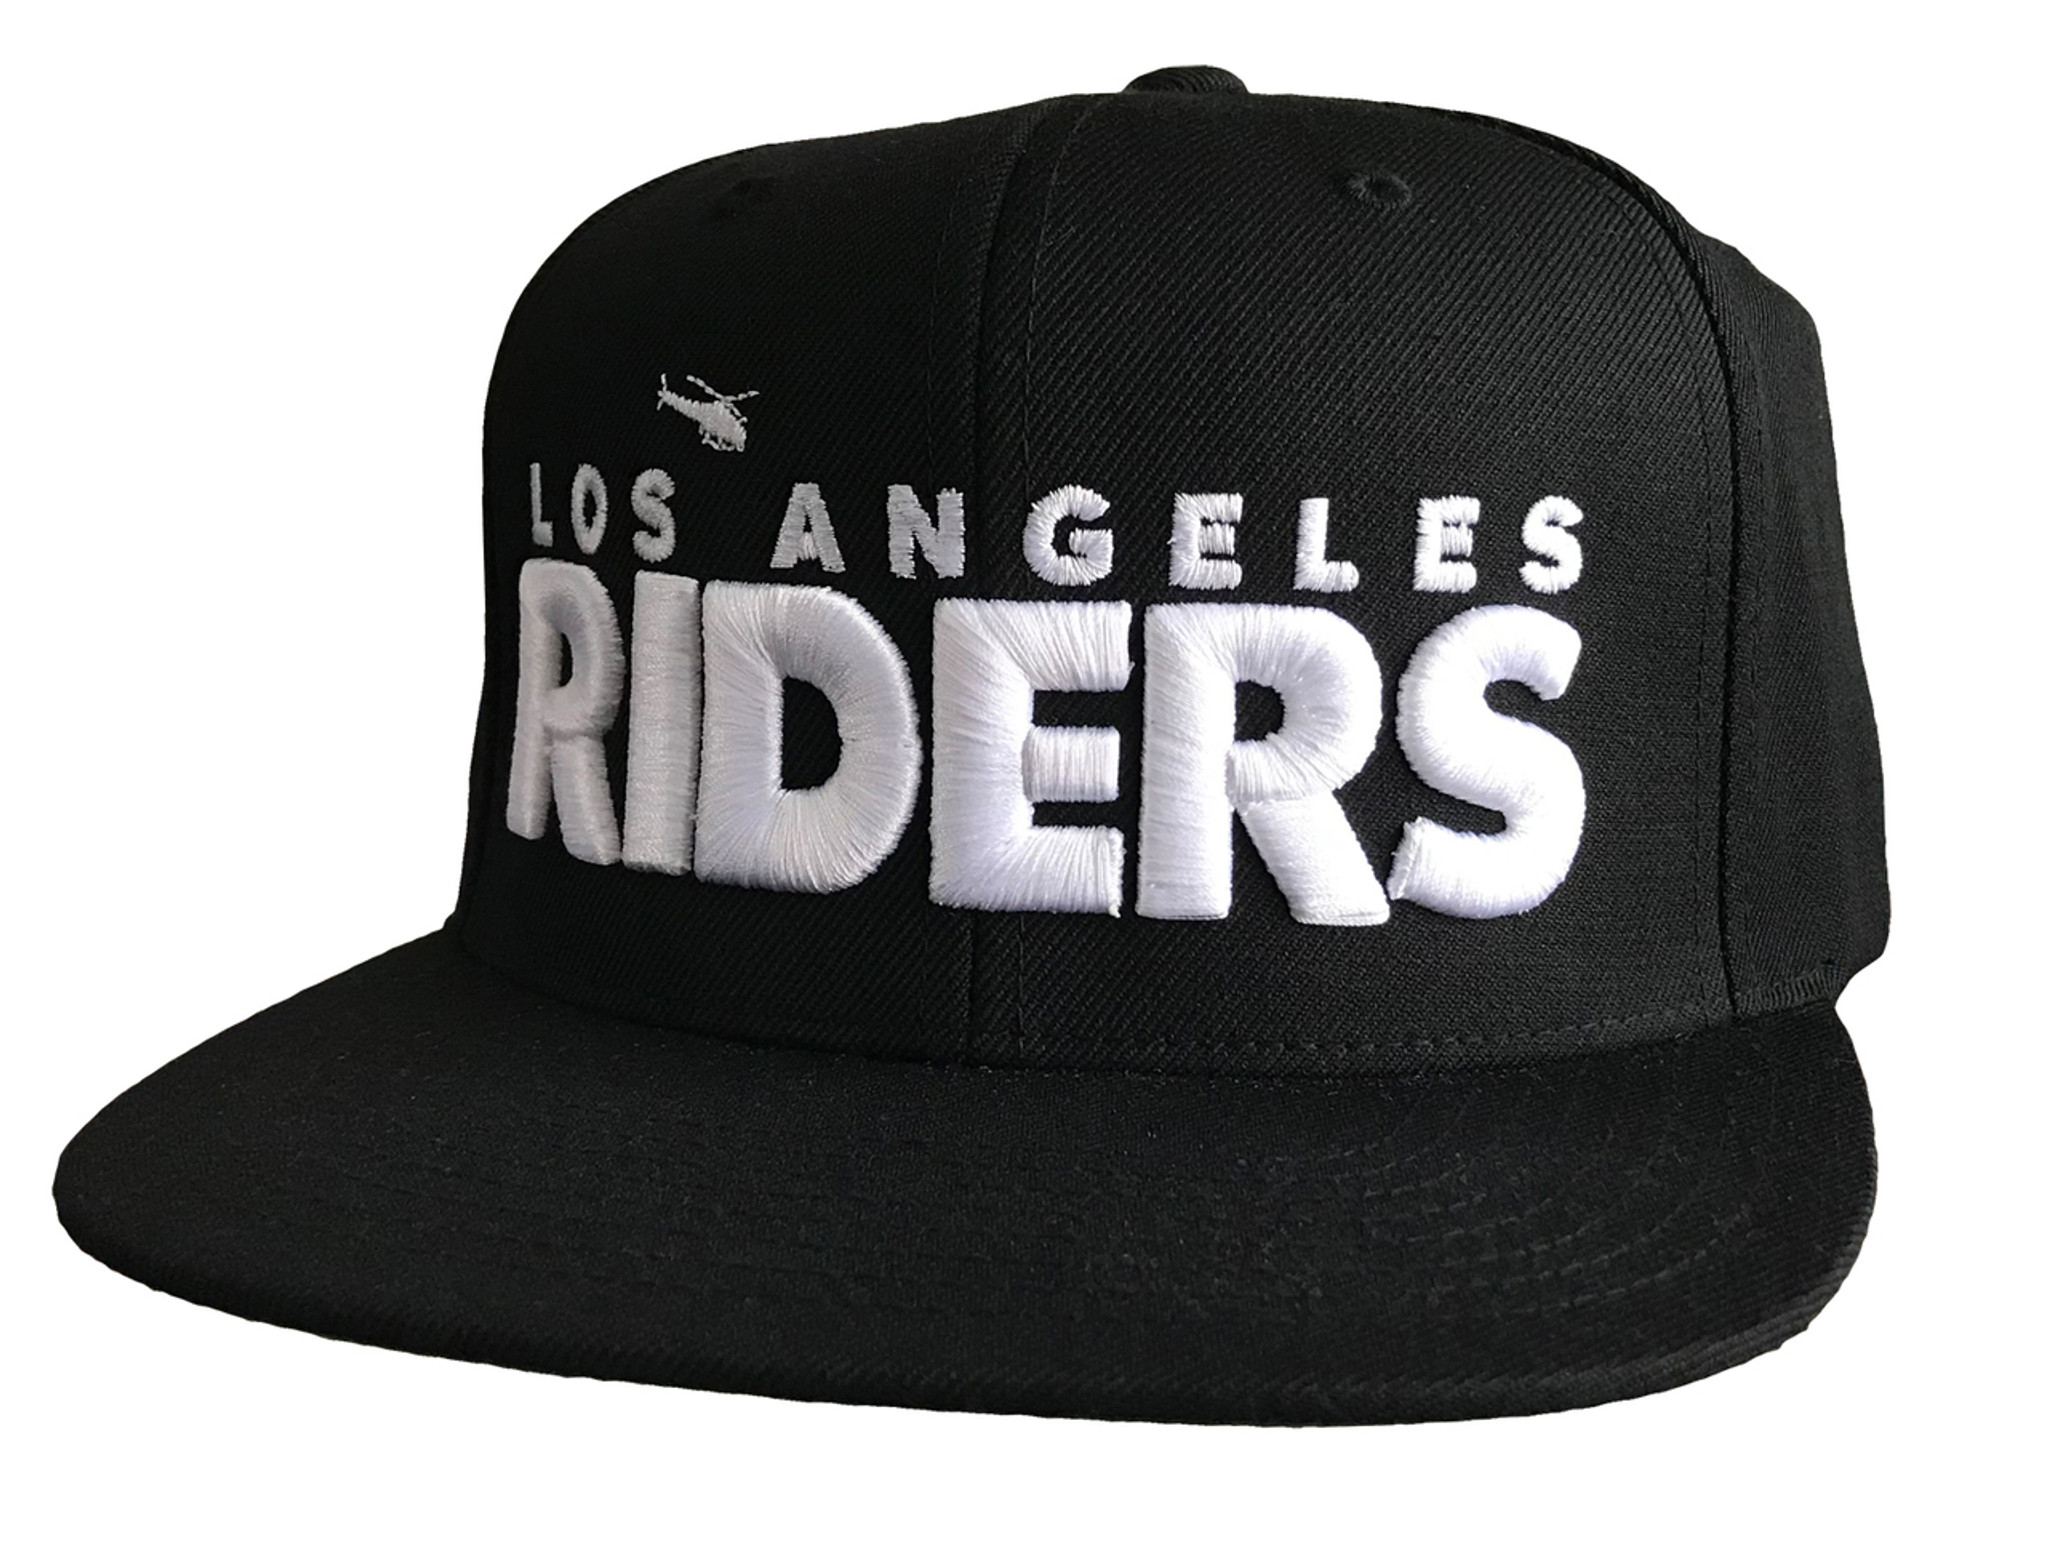 Streetwise Los Angeles Riders Snapback | West Coast Republic